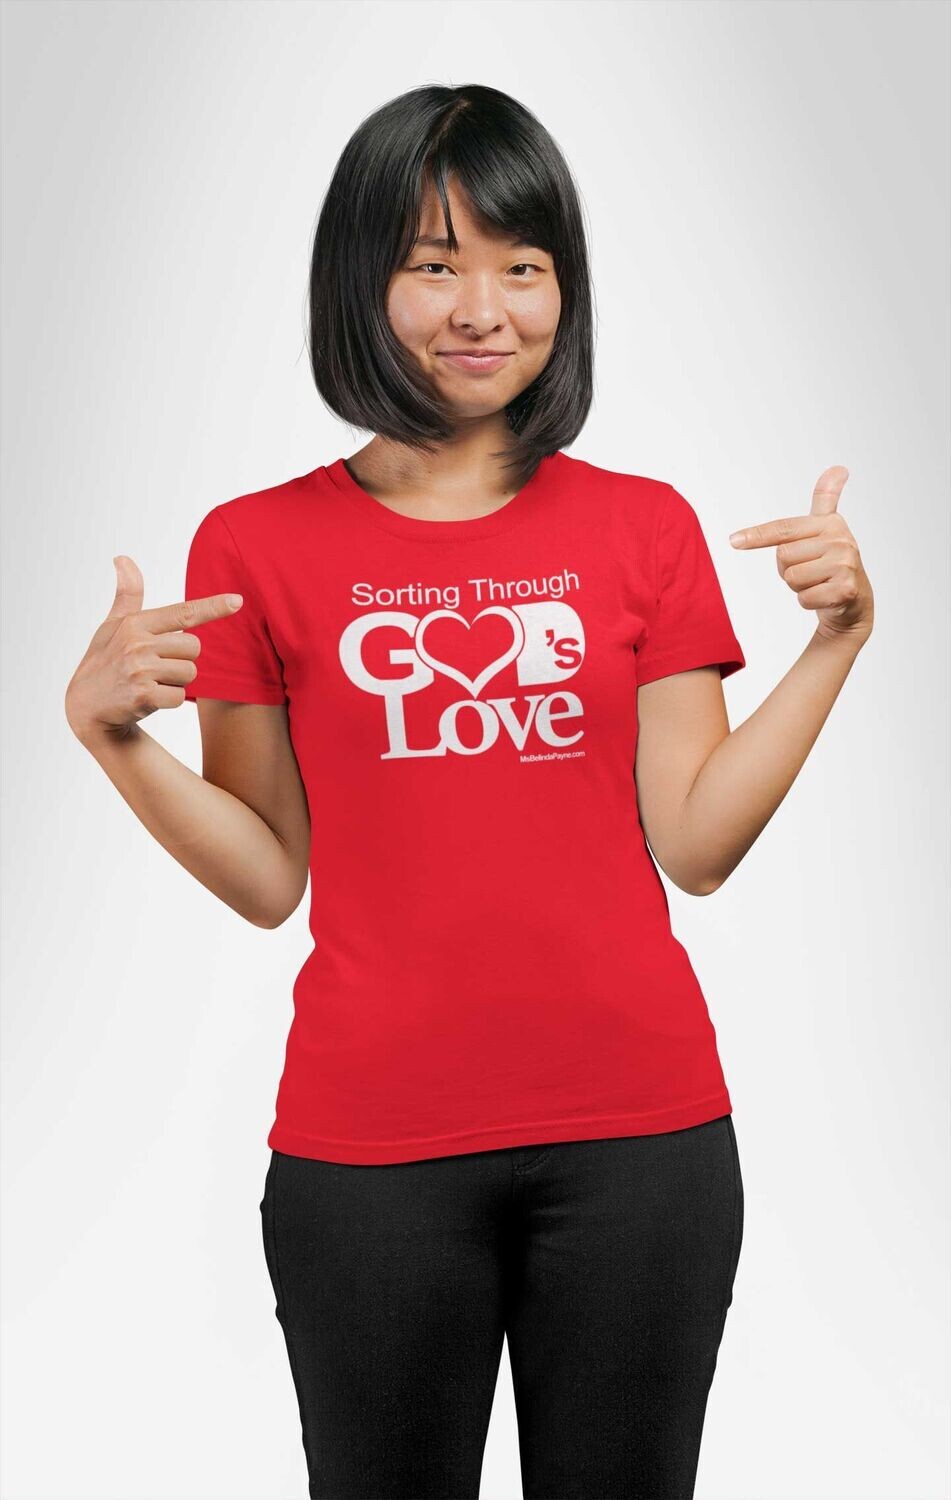 Sorting Through God's Love T-Shirt